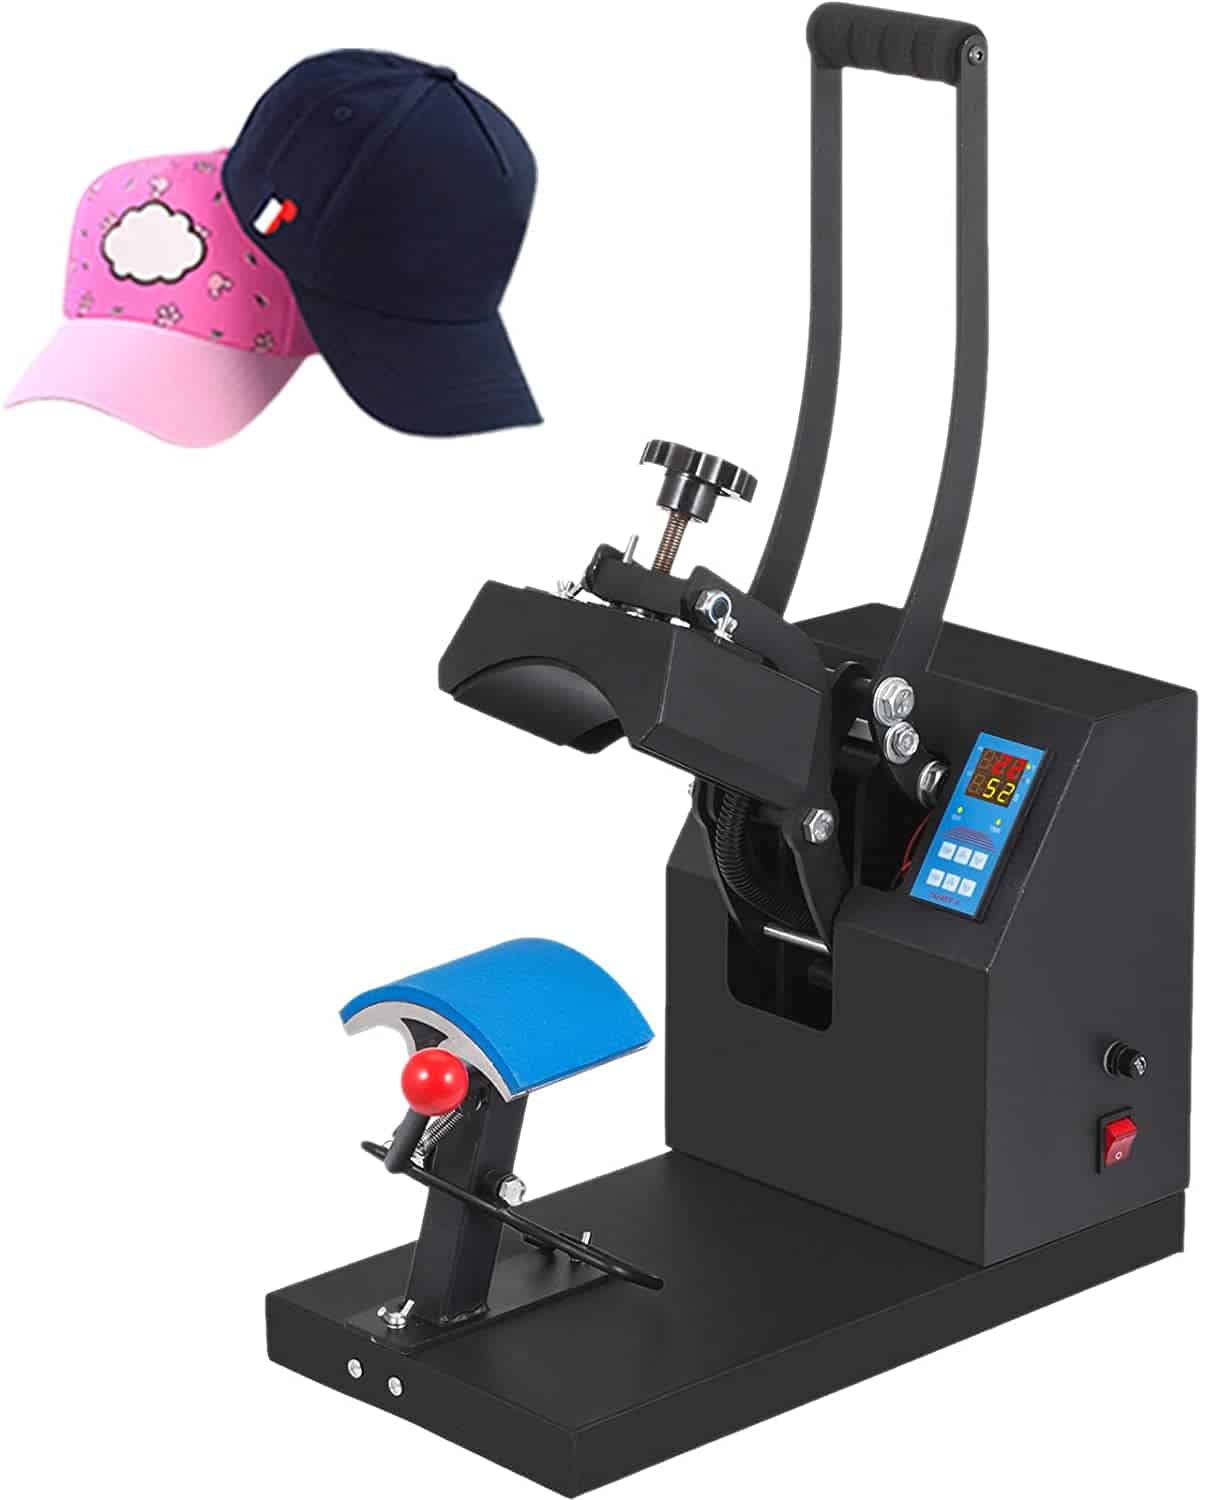 Mophorn Cap Press Machine And VEVOR Heat Press Machine Review - MSPoweruser